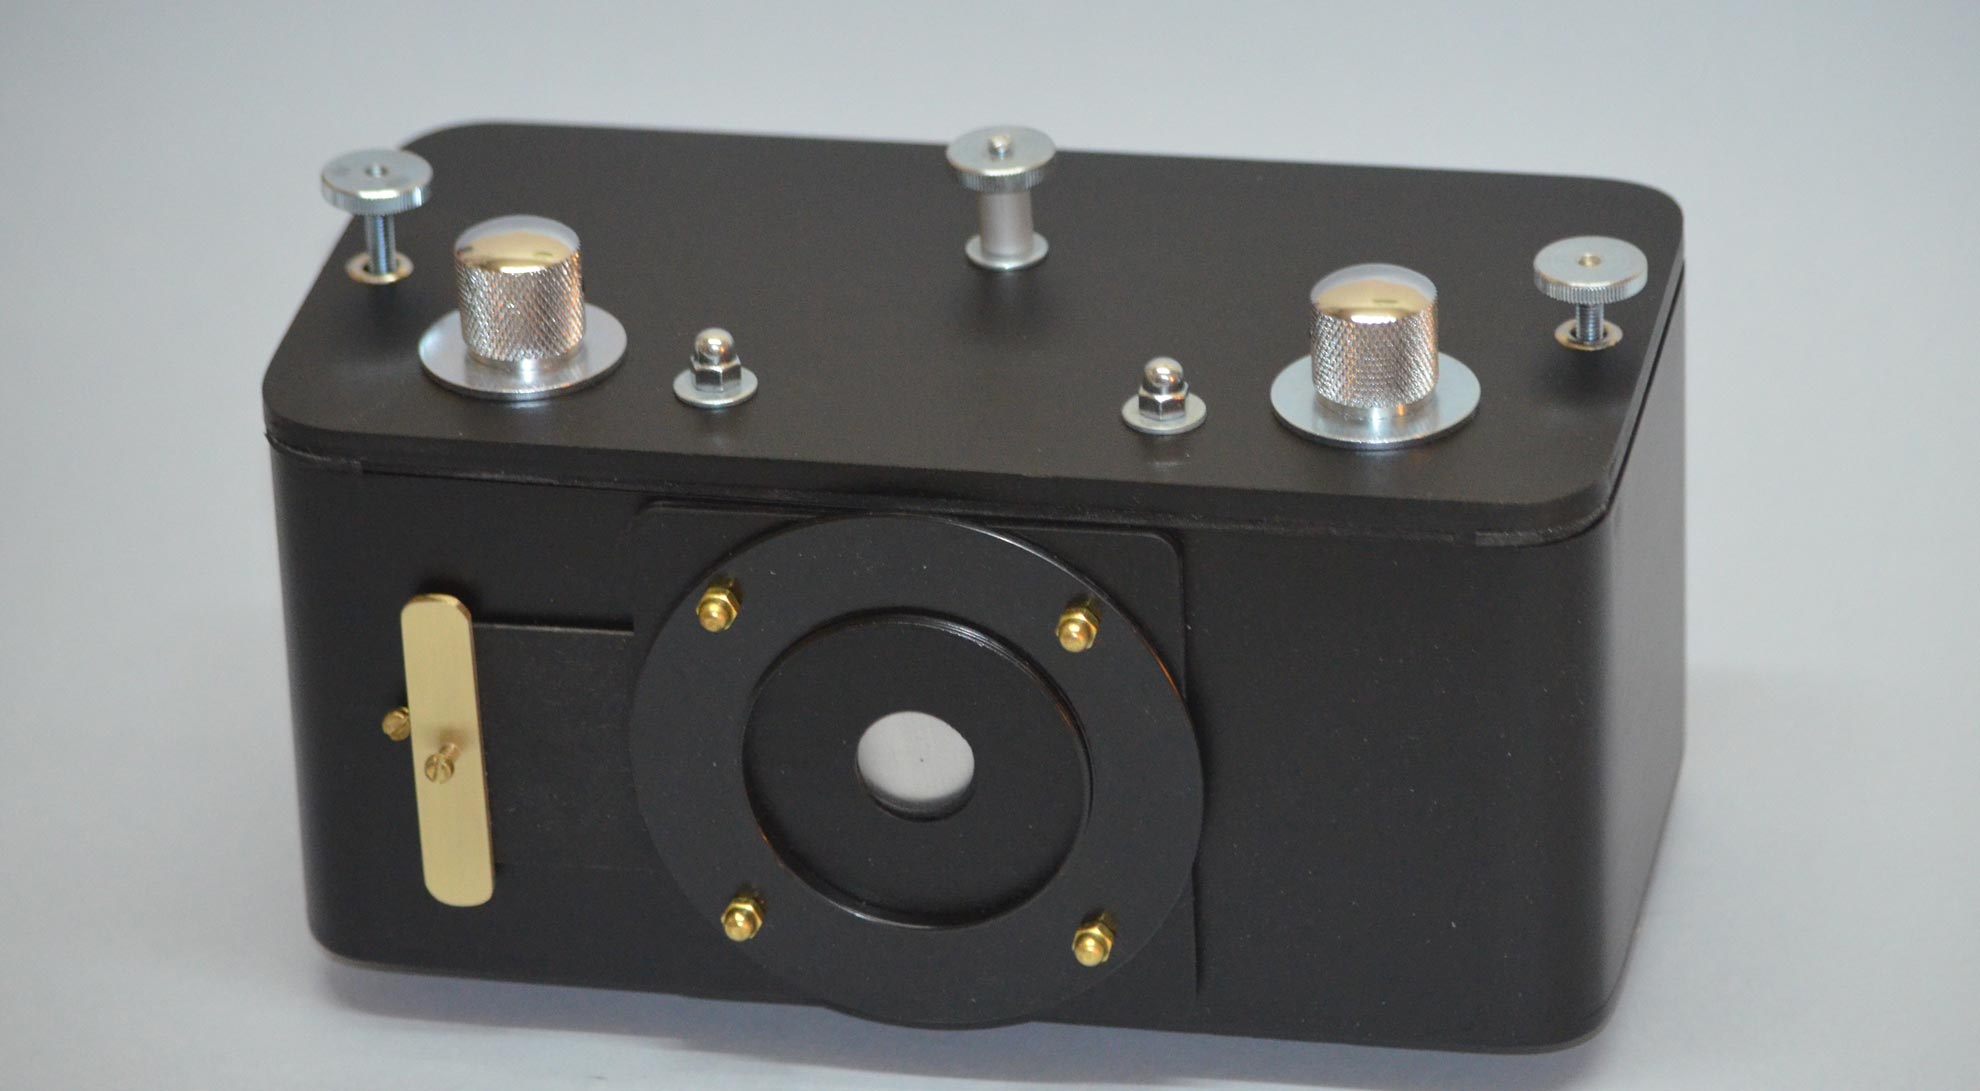 6x17 cm curved plane pinhole camera in black finishing